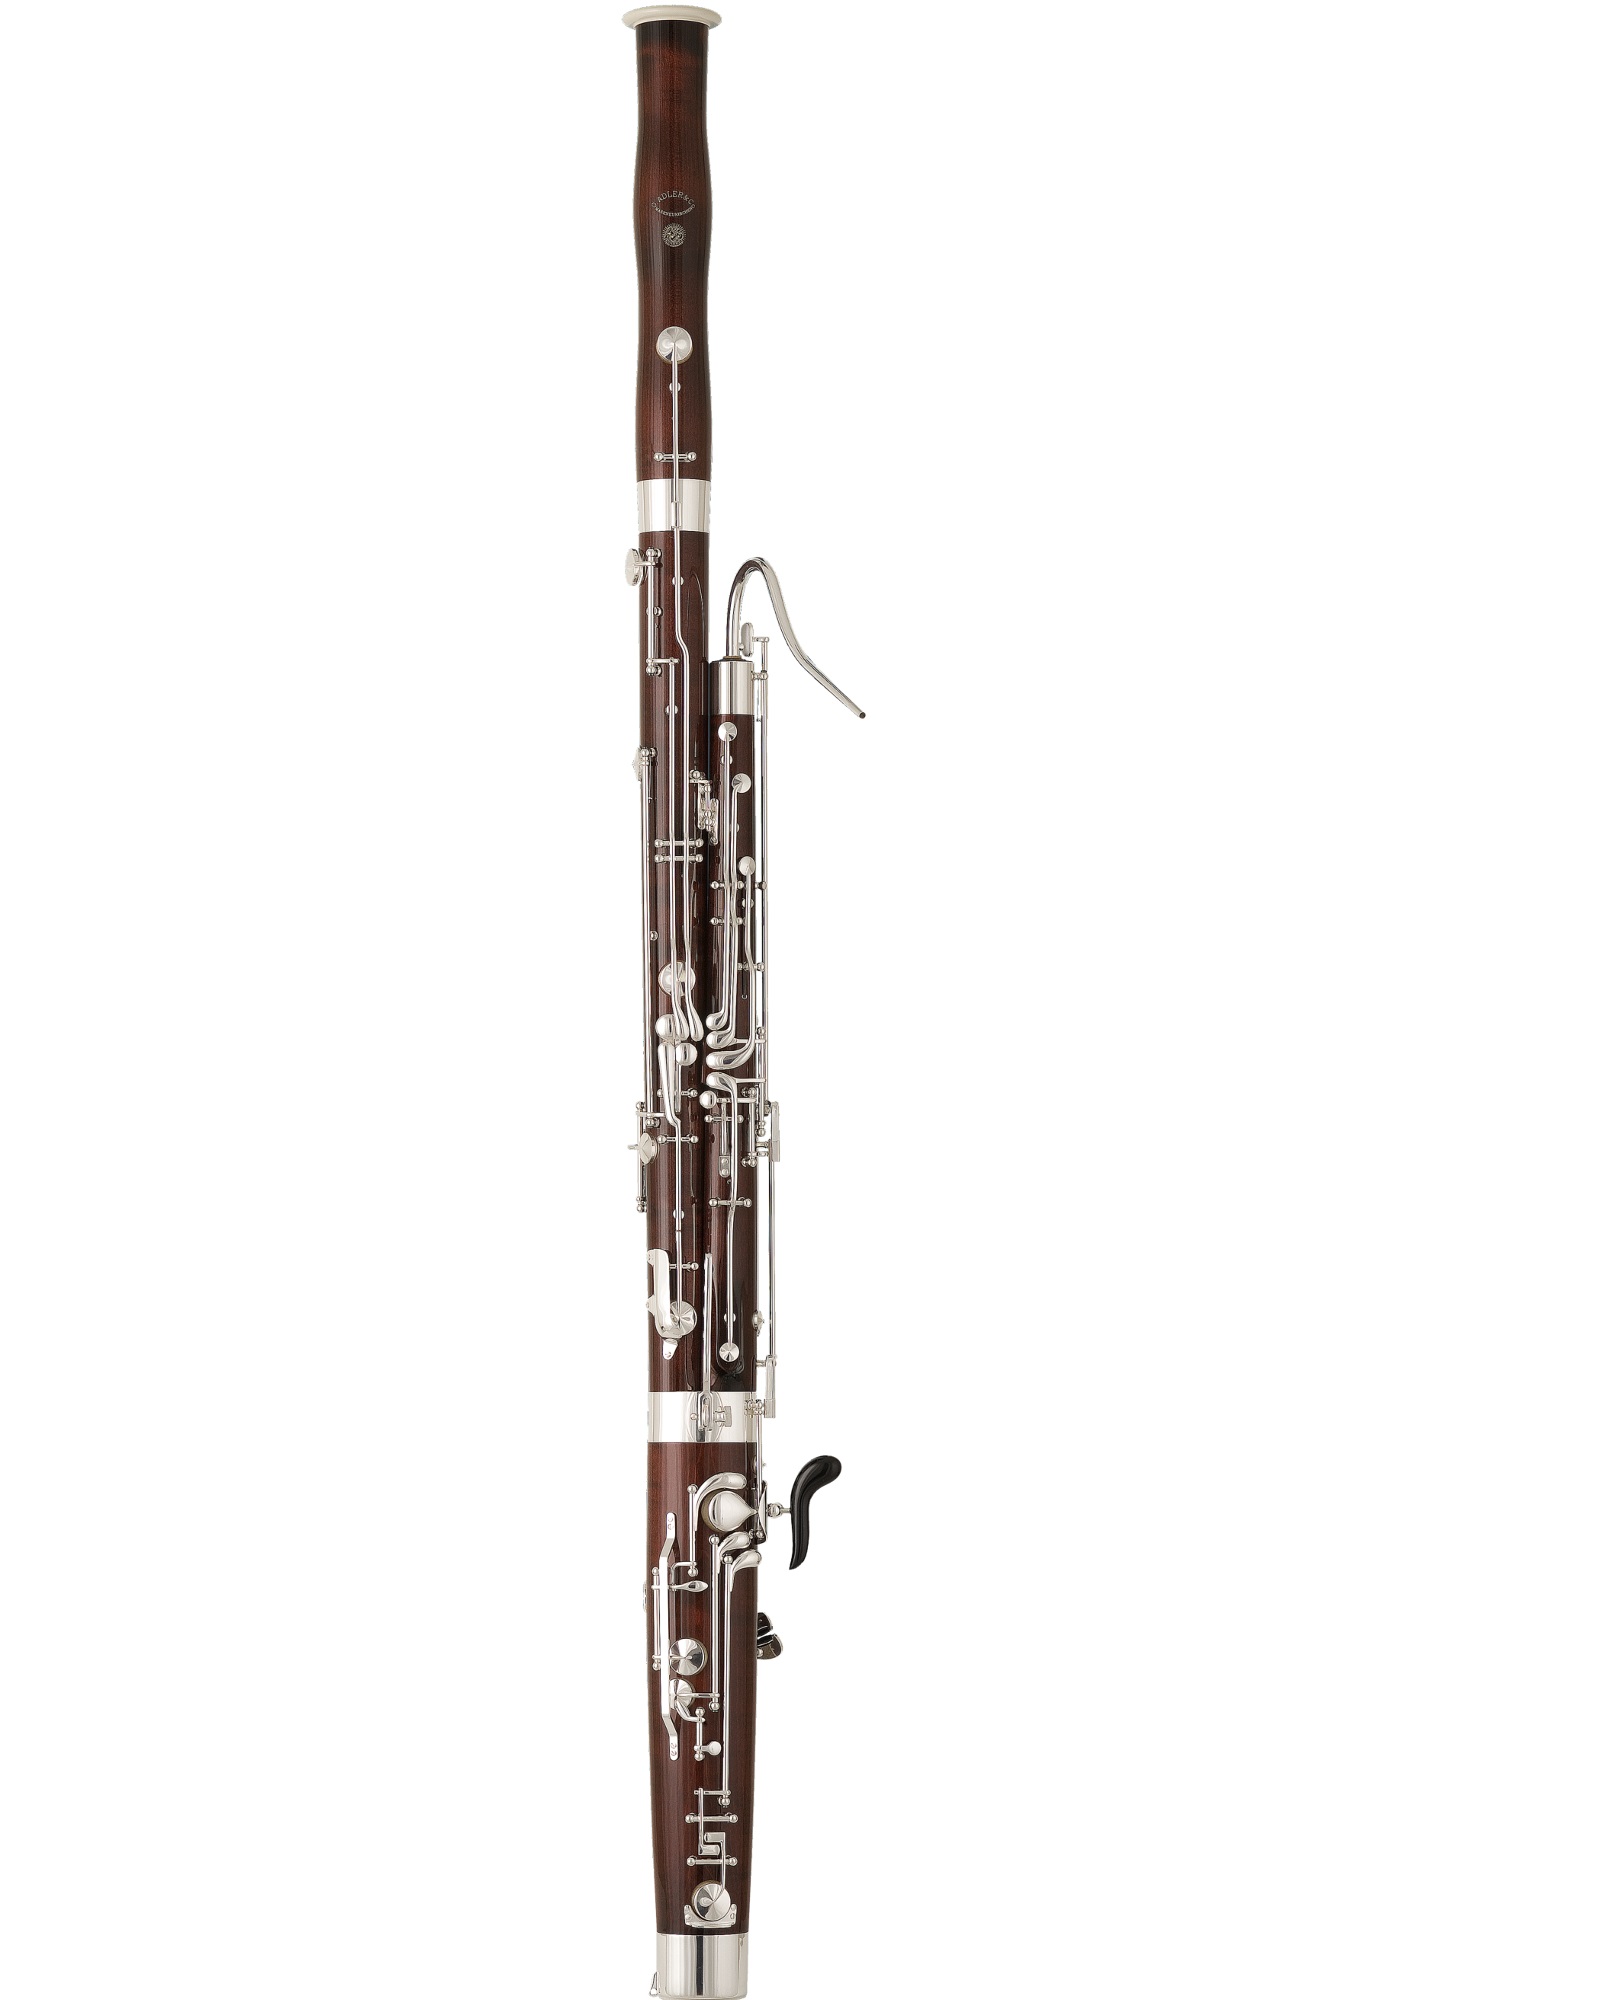 Bassoon Model 1357, by Oscar Adler & Co.